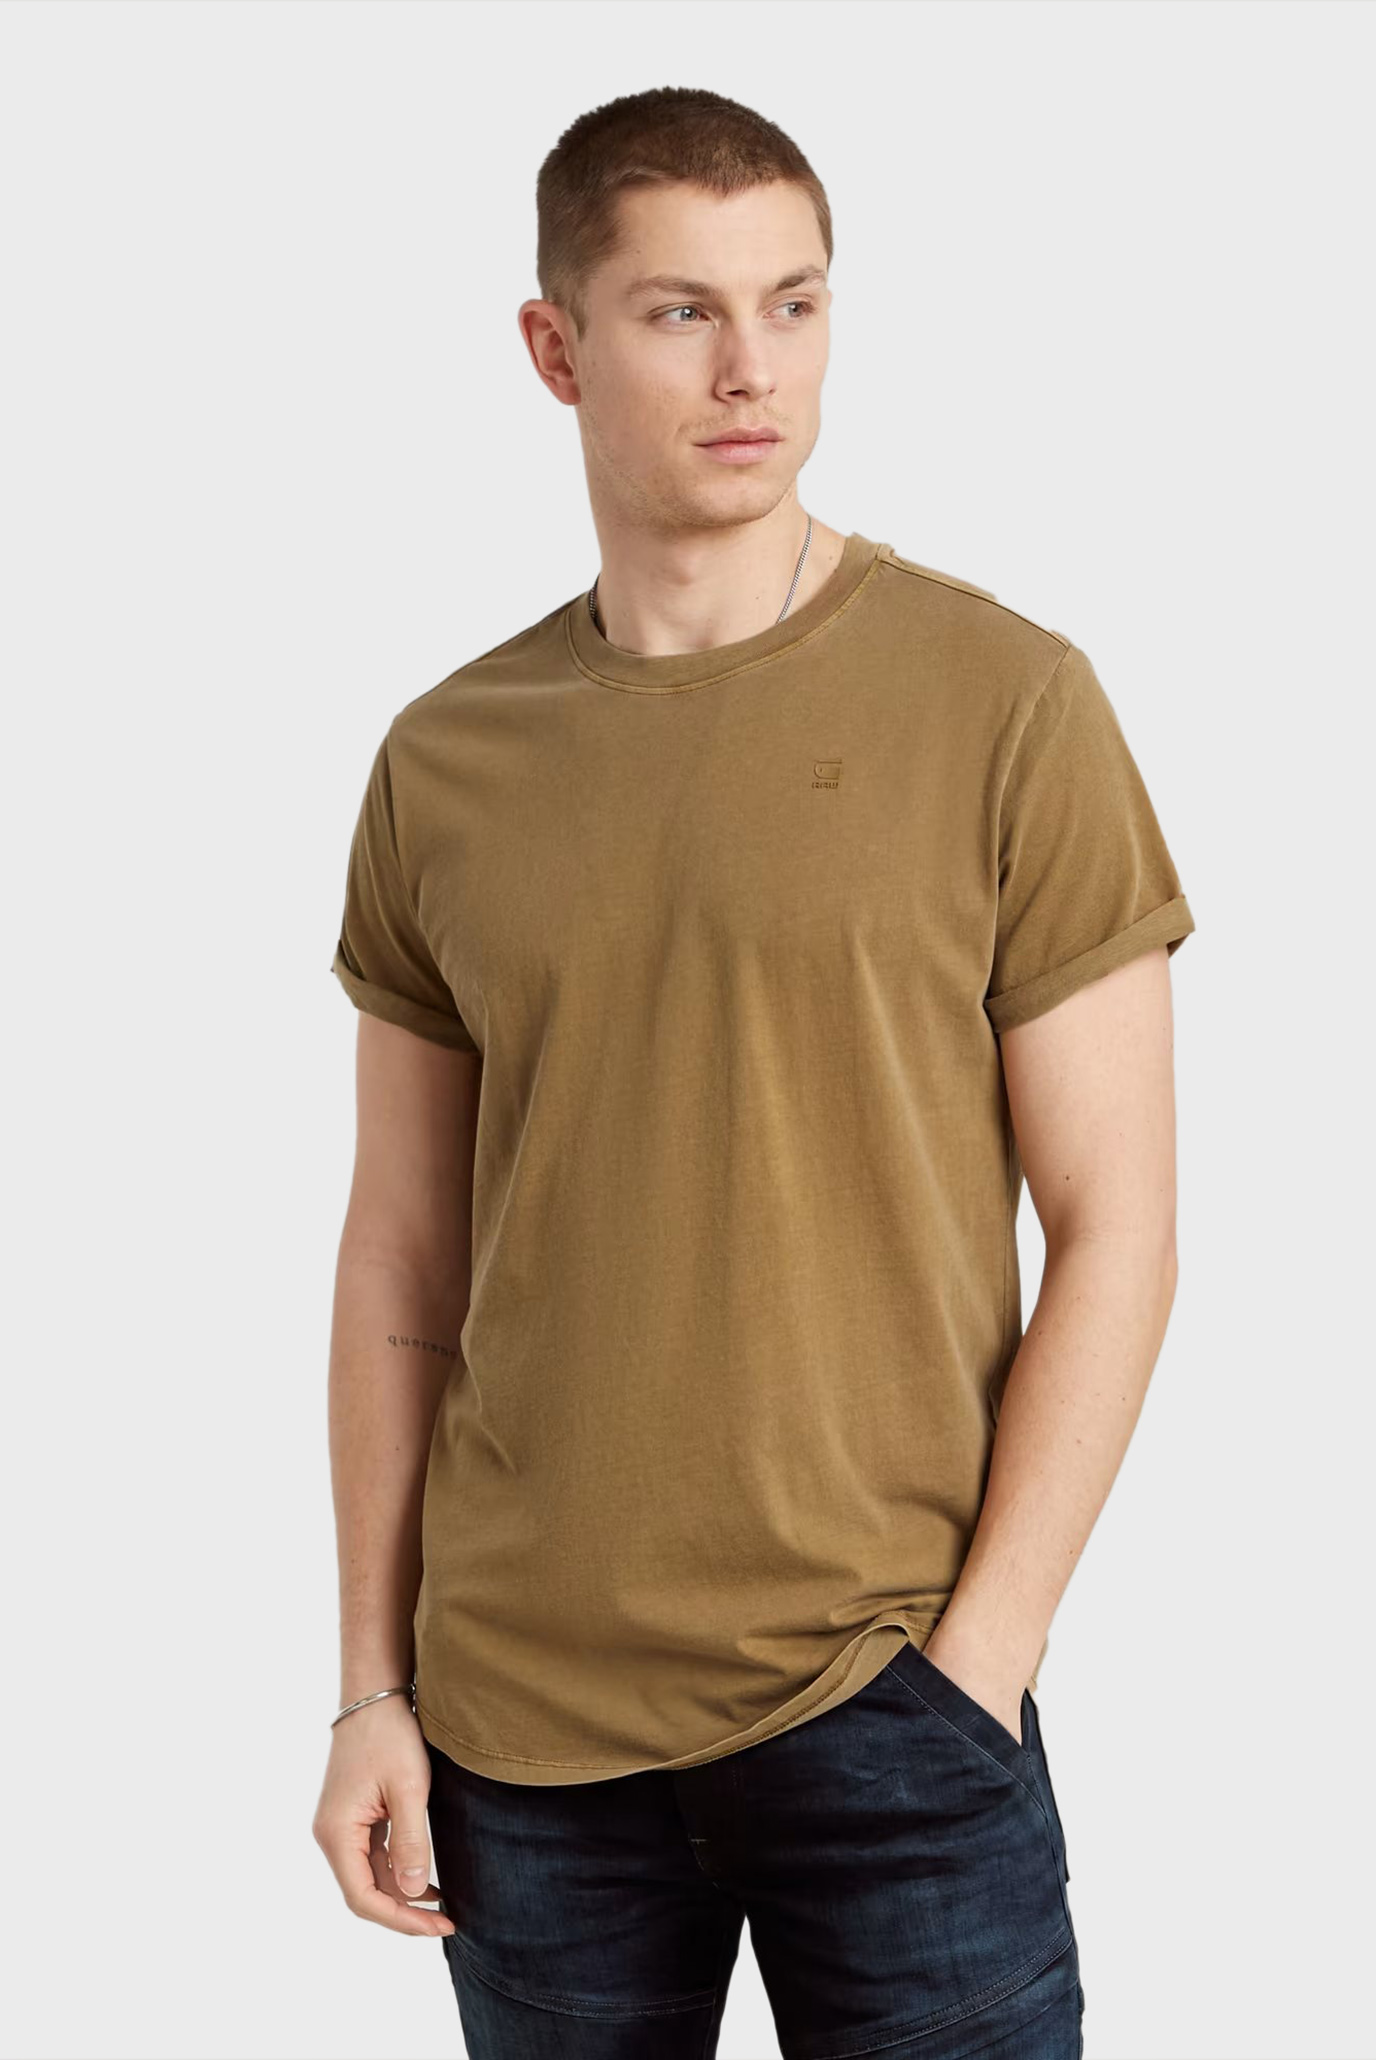 Мужская коричневая футболка Lash r t s/s 1